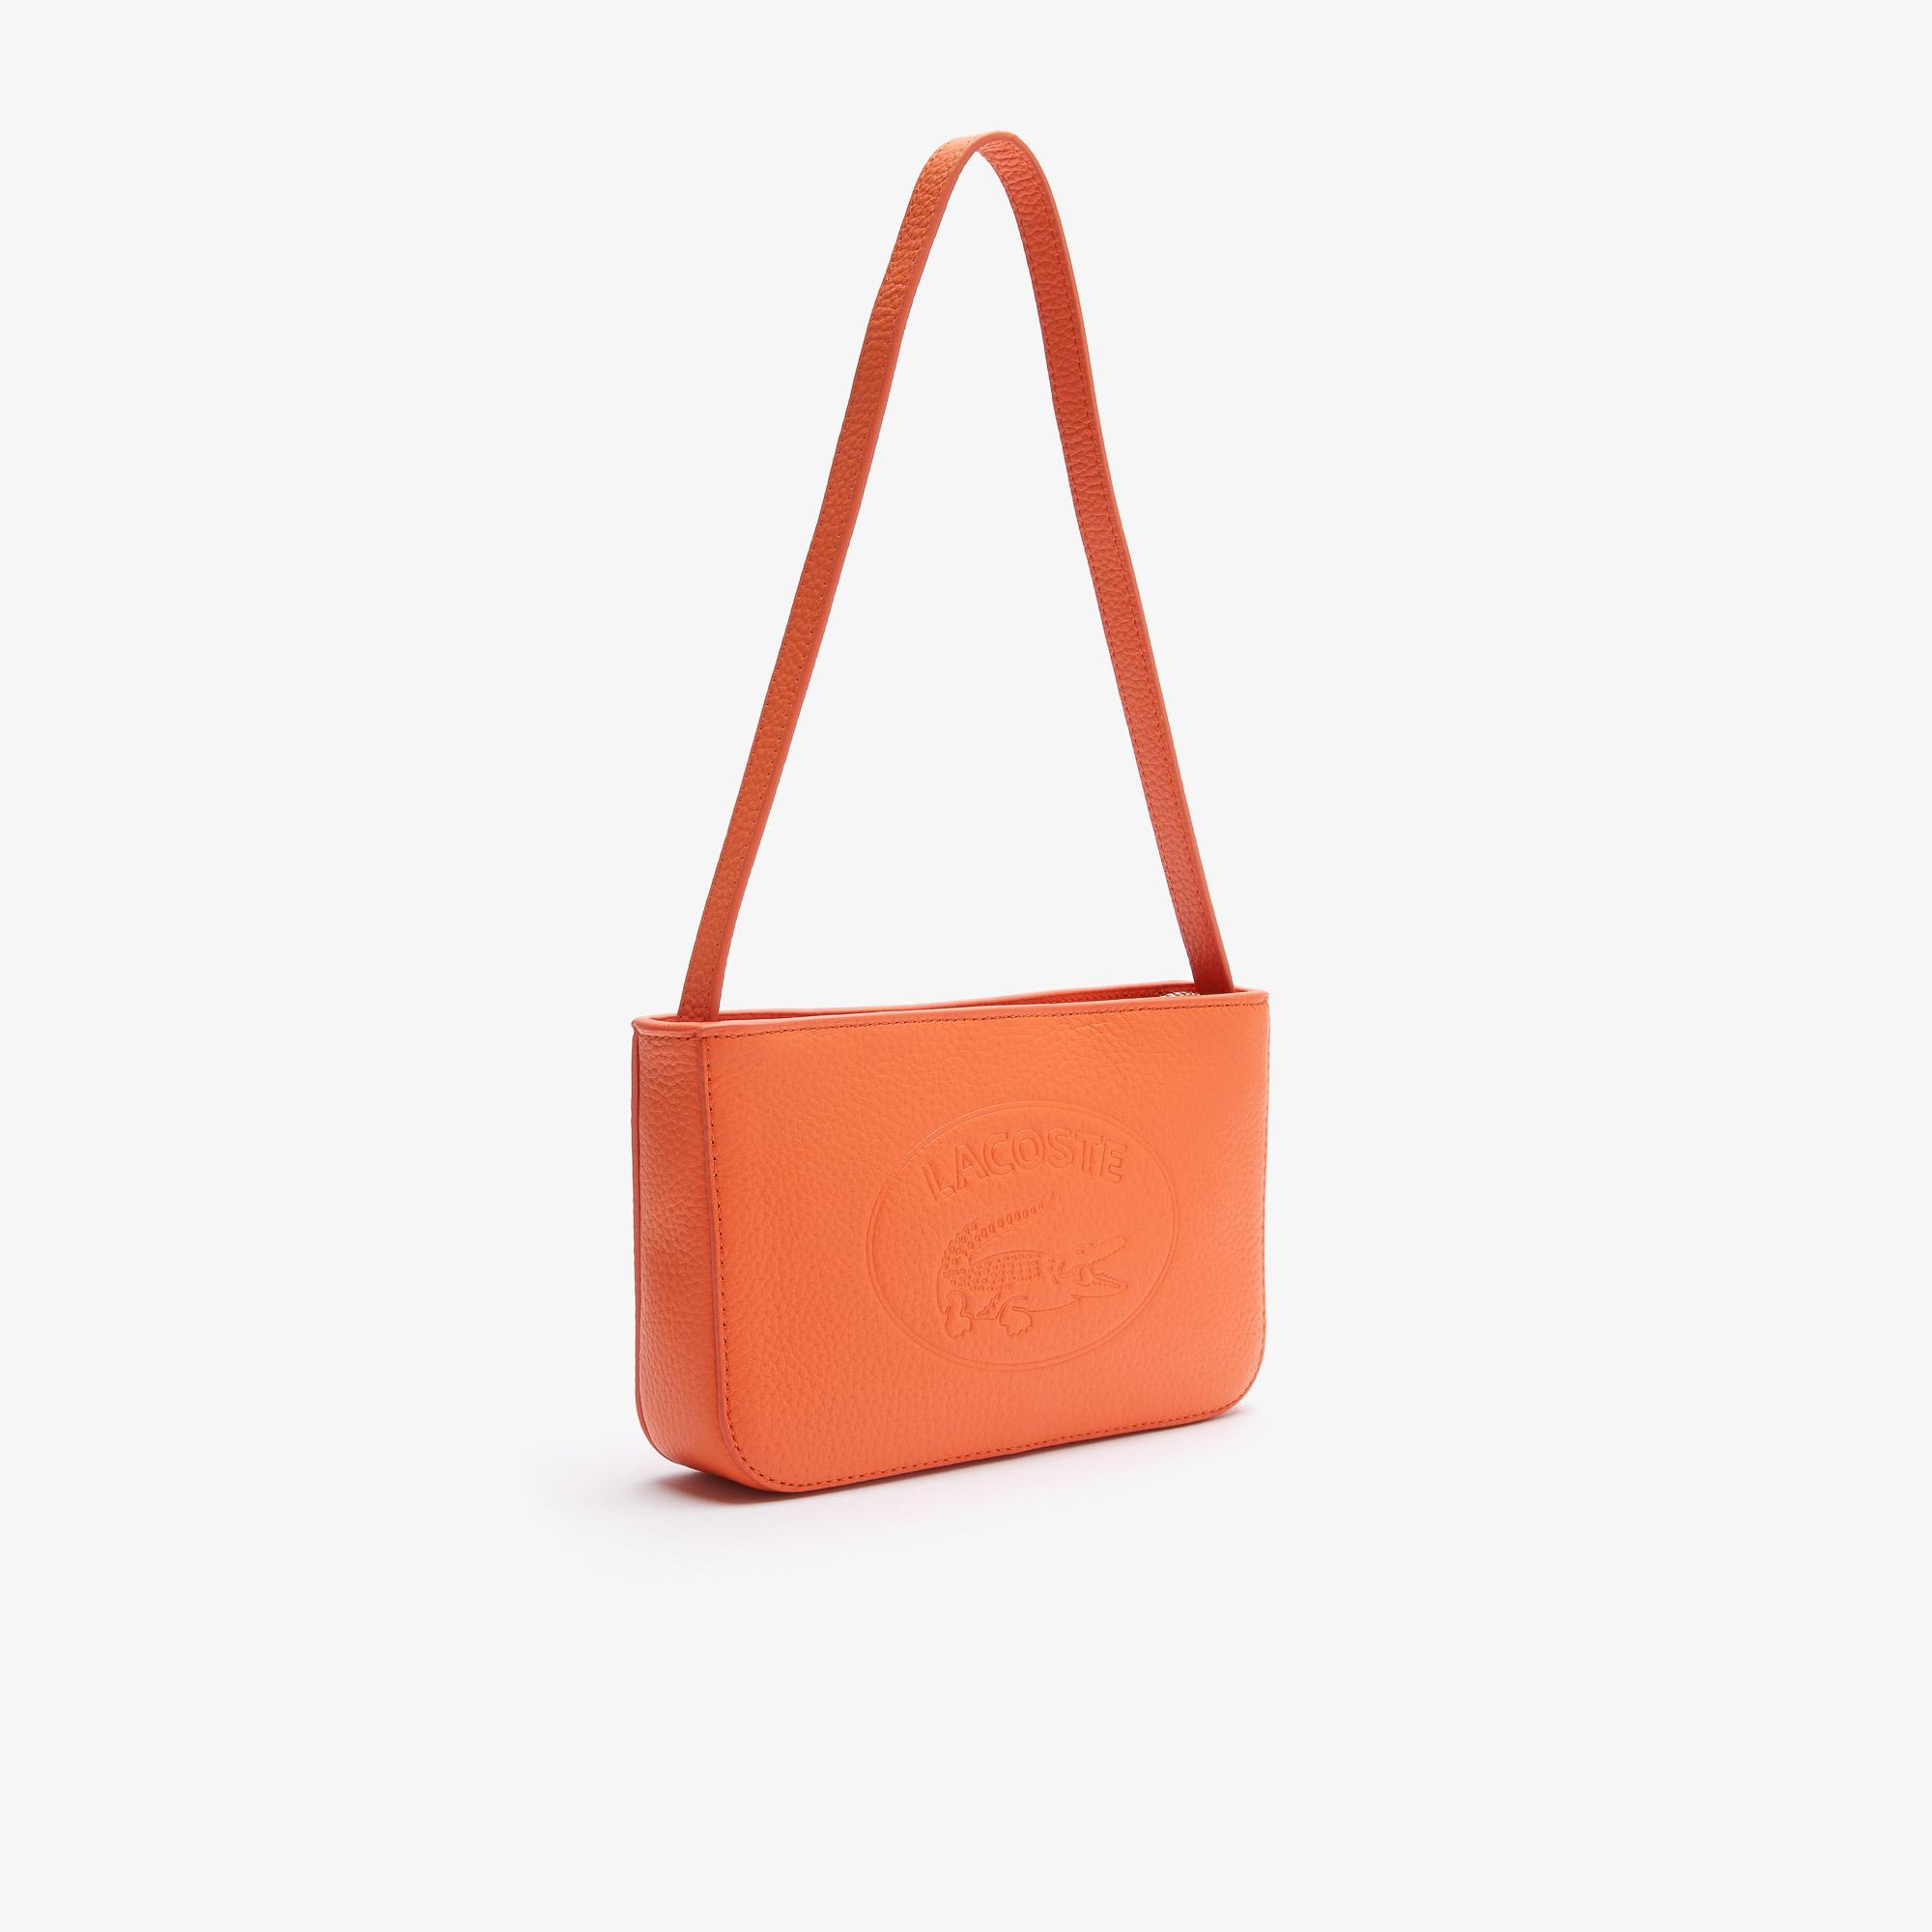 Lacoste Women's bags Premium